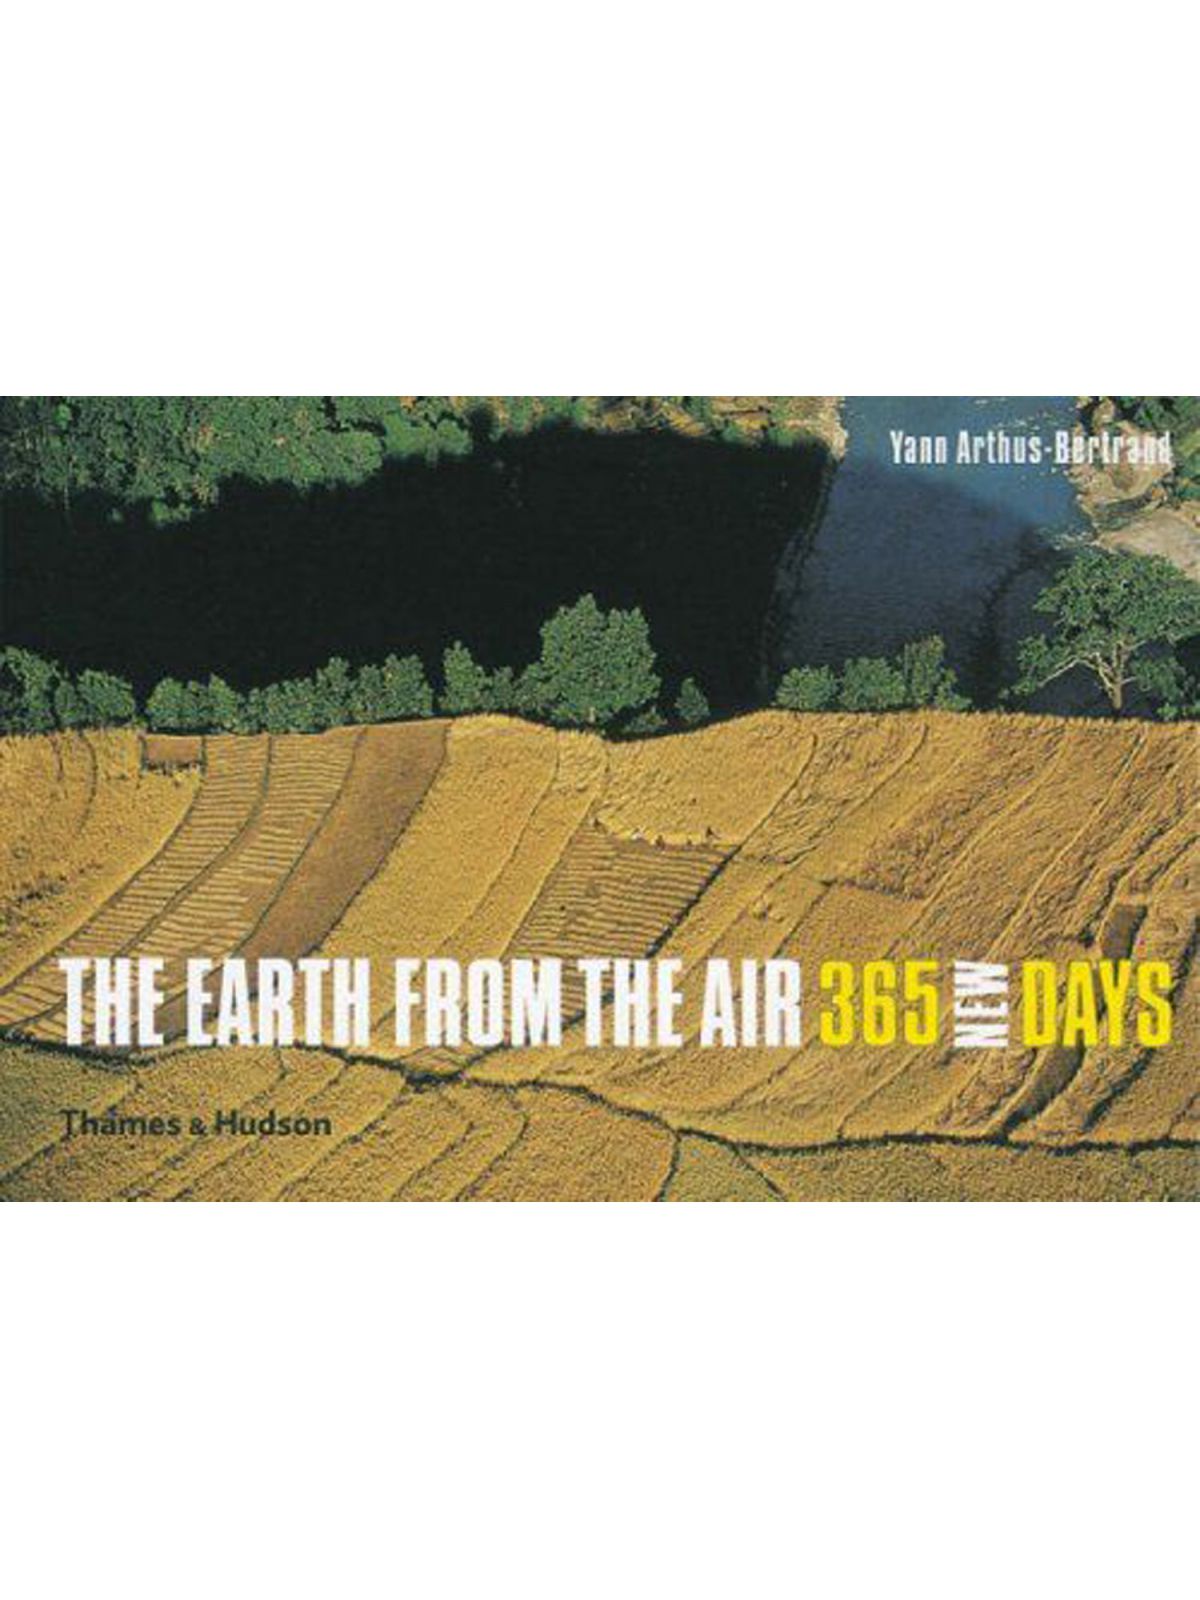 EARTH FROM THE AIR 365 NEW YANN, ARTHRUS BERTRAND Купить Книгу на Английском